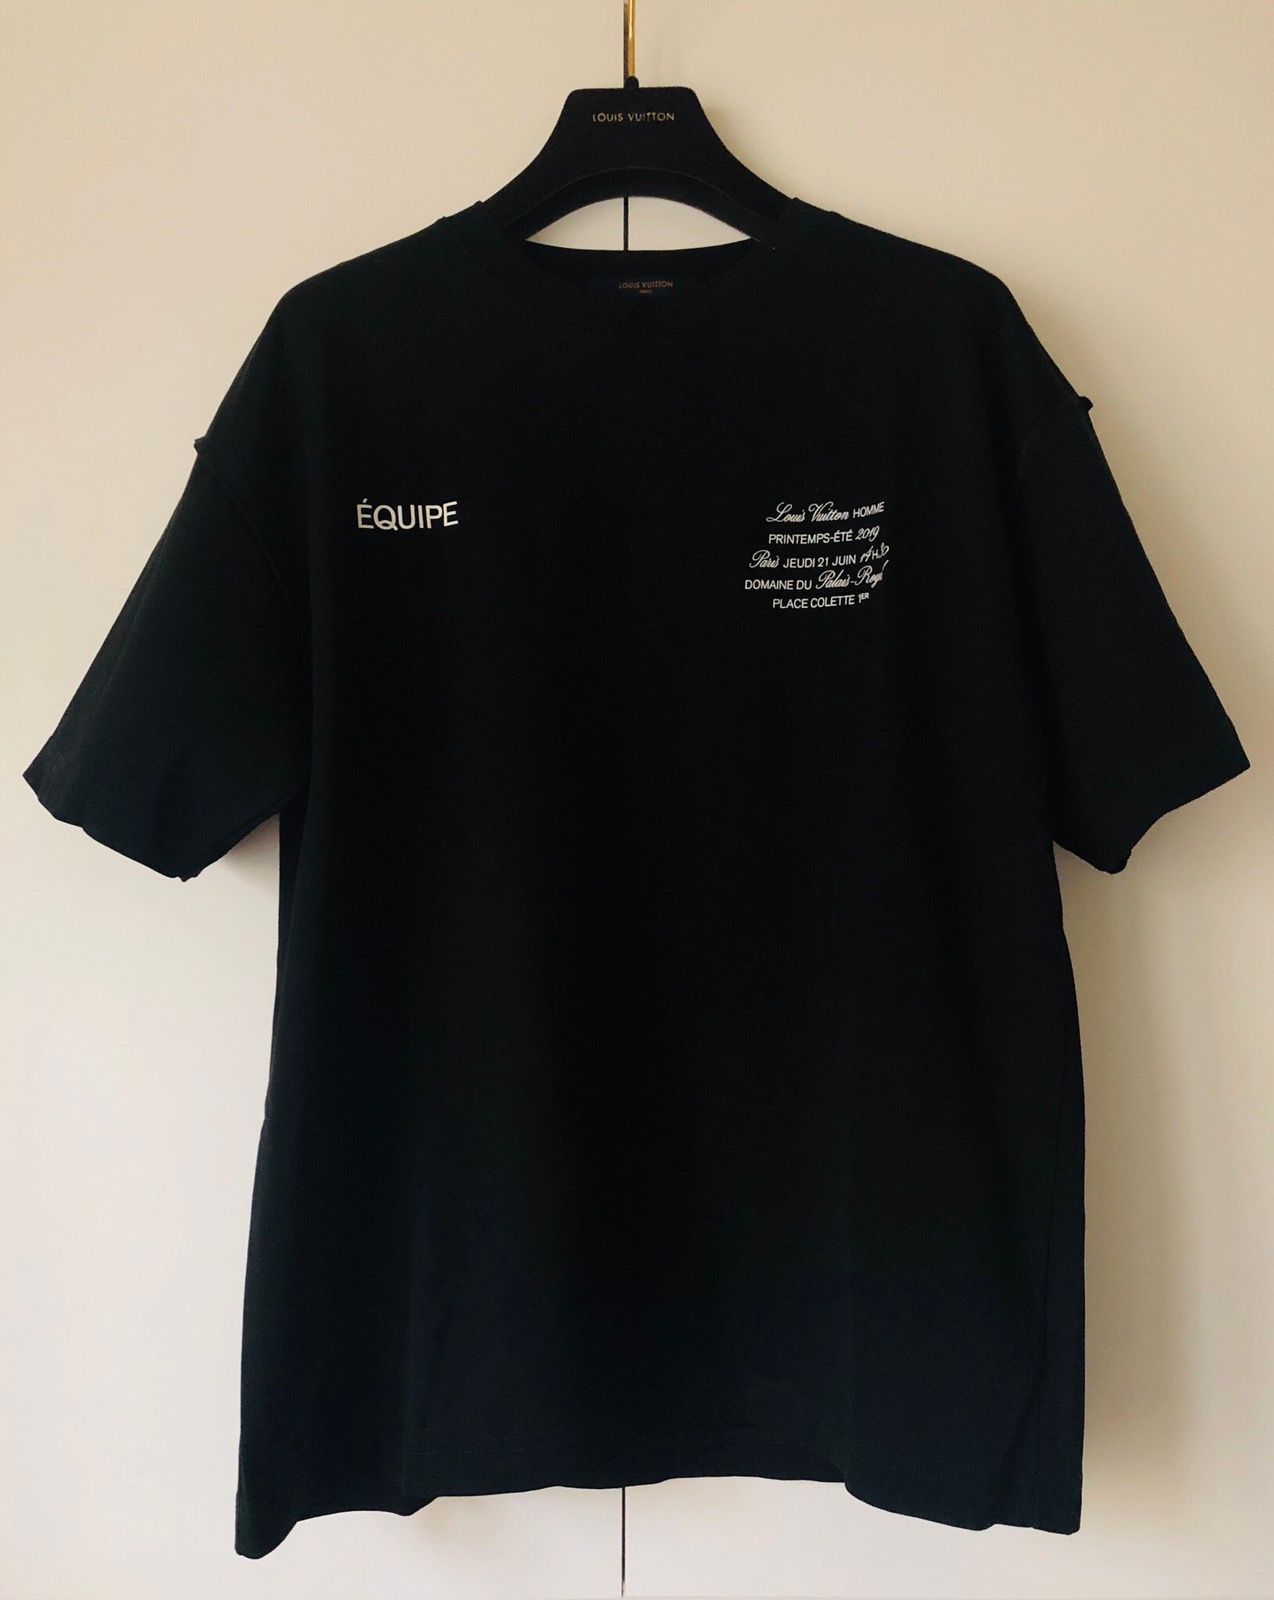 LOUIS VUITTON Japan limited staff shirt S size 1A8QD1